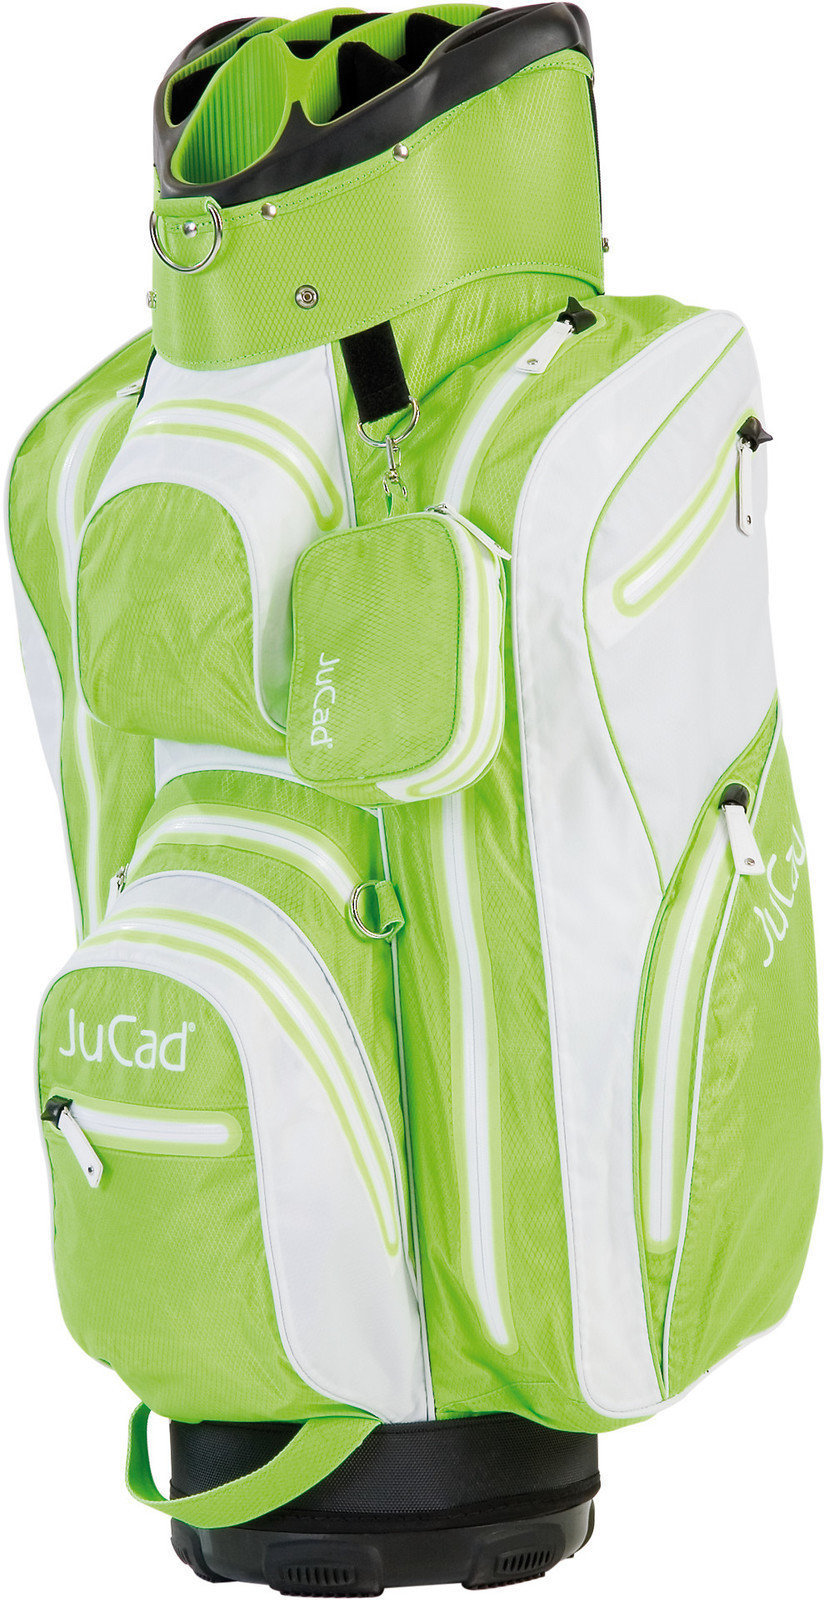 Cart Bag Jucad Aquastop White/Green Cart Bag